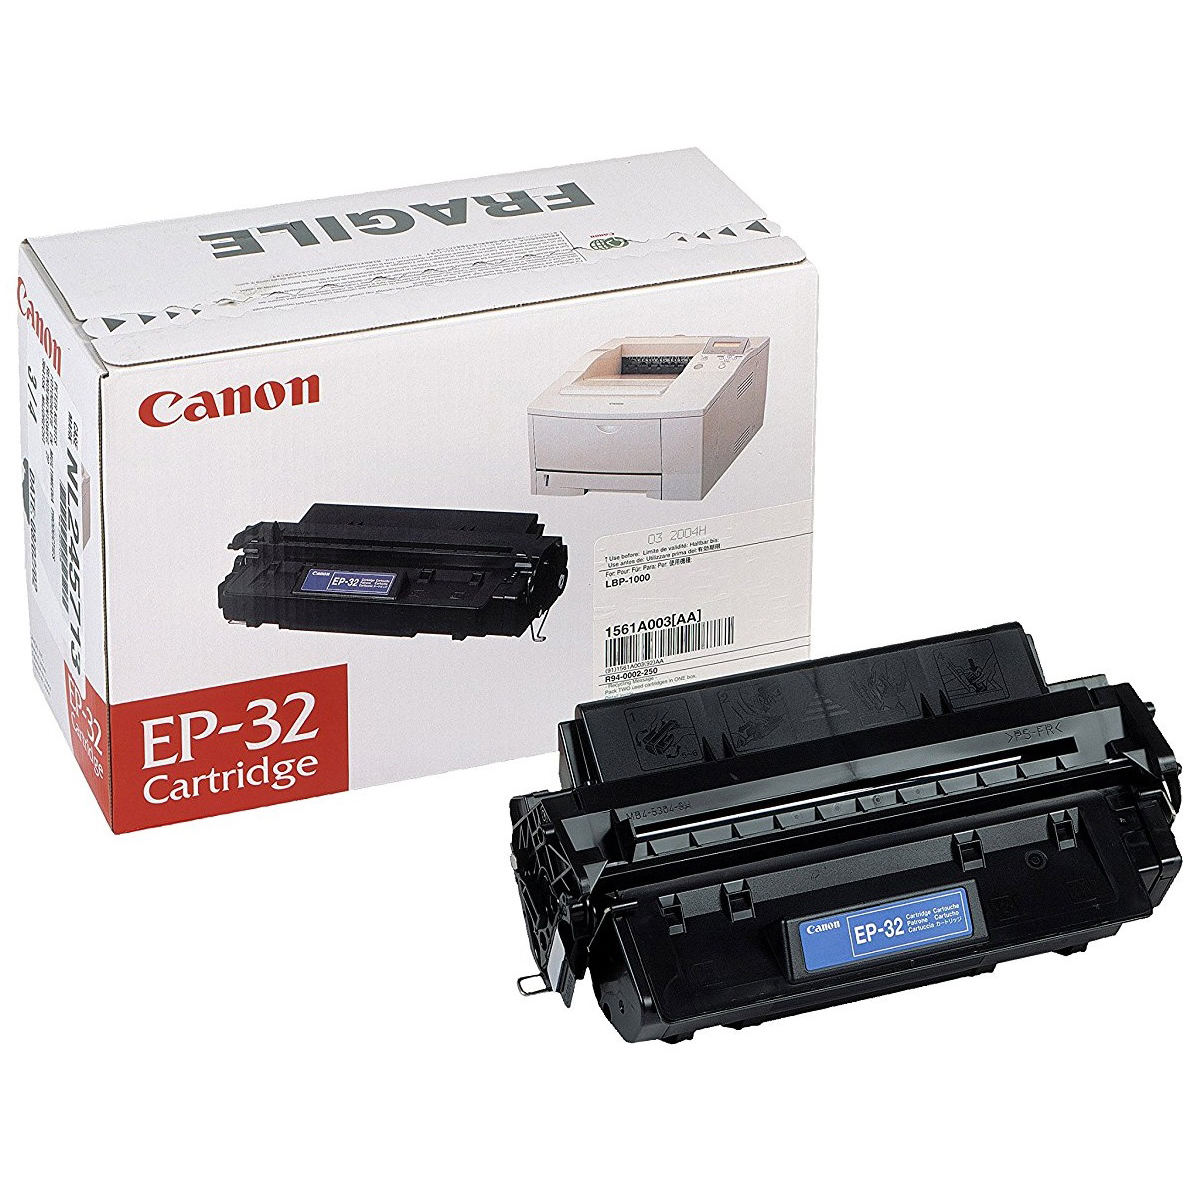 Original Canon EP-32 Black Toner Cartridge (1561A003AA)